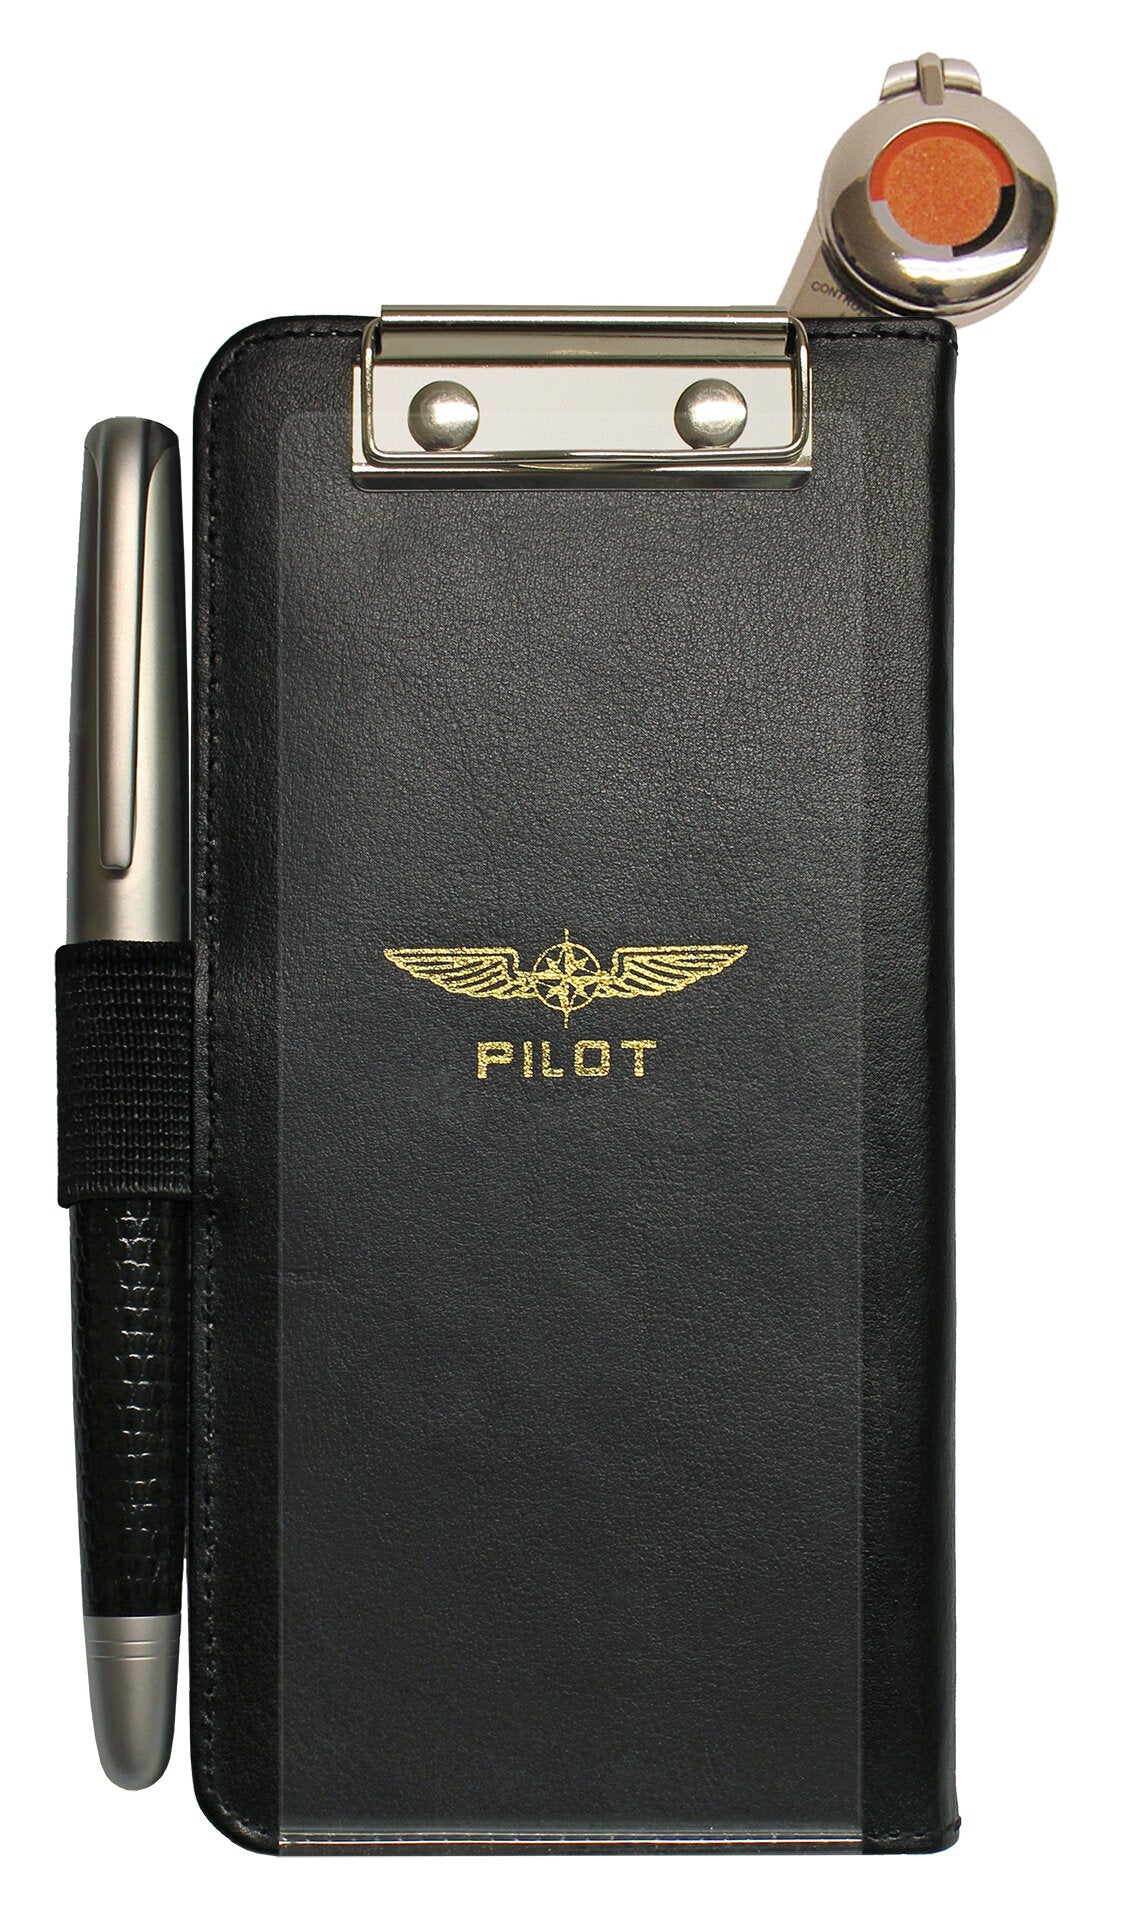 i-Pilot Phone Kneeboard from Design 4 Pilots